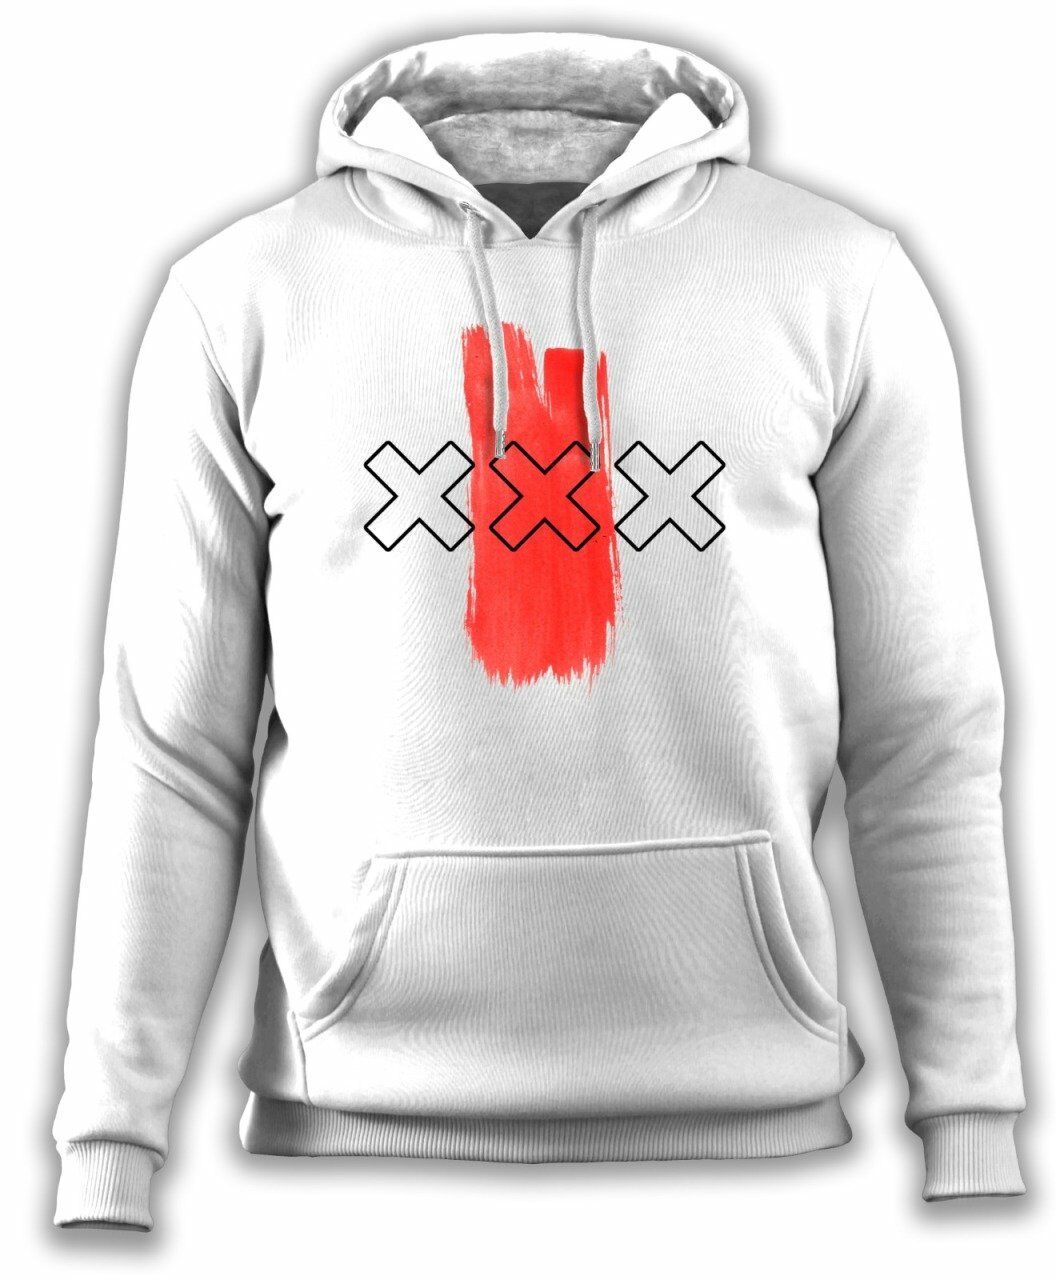 Ajax 'XXX' Sweatshirt